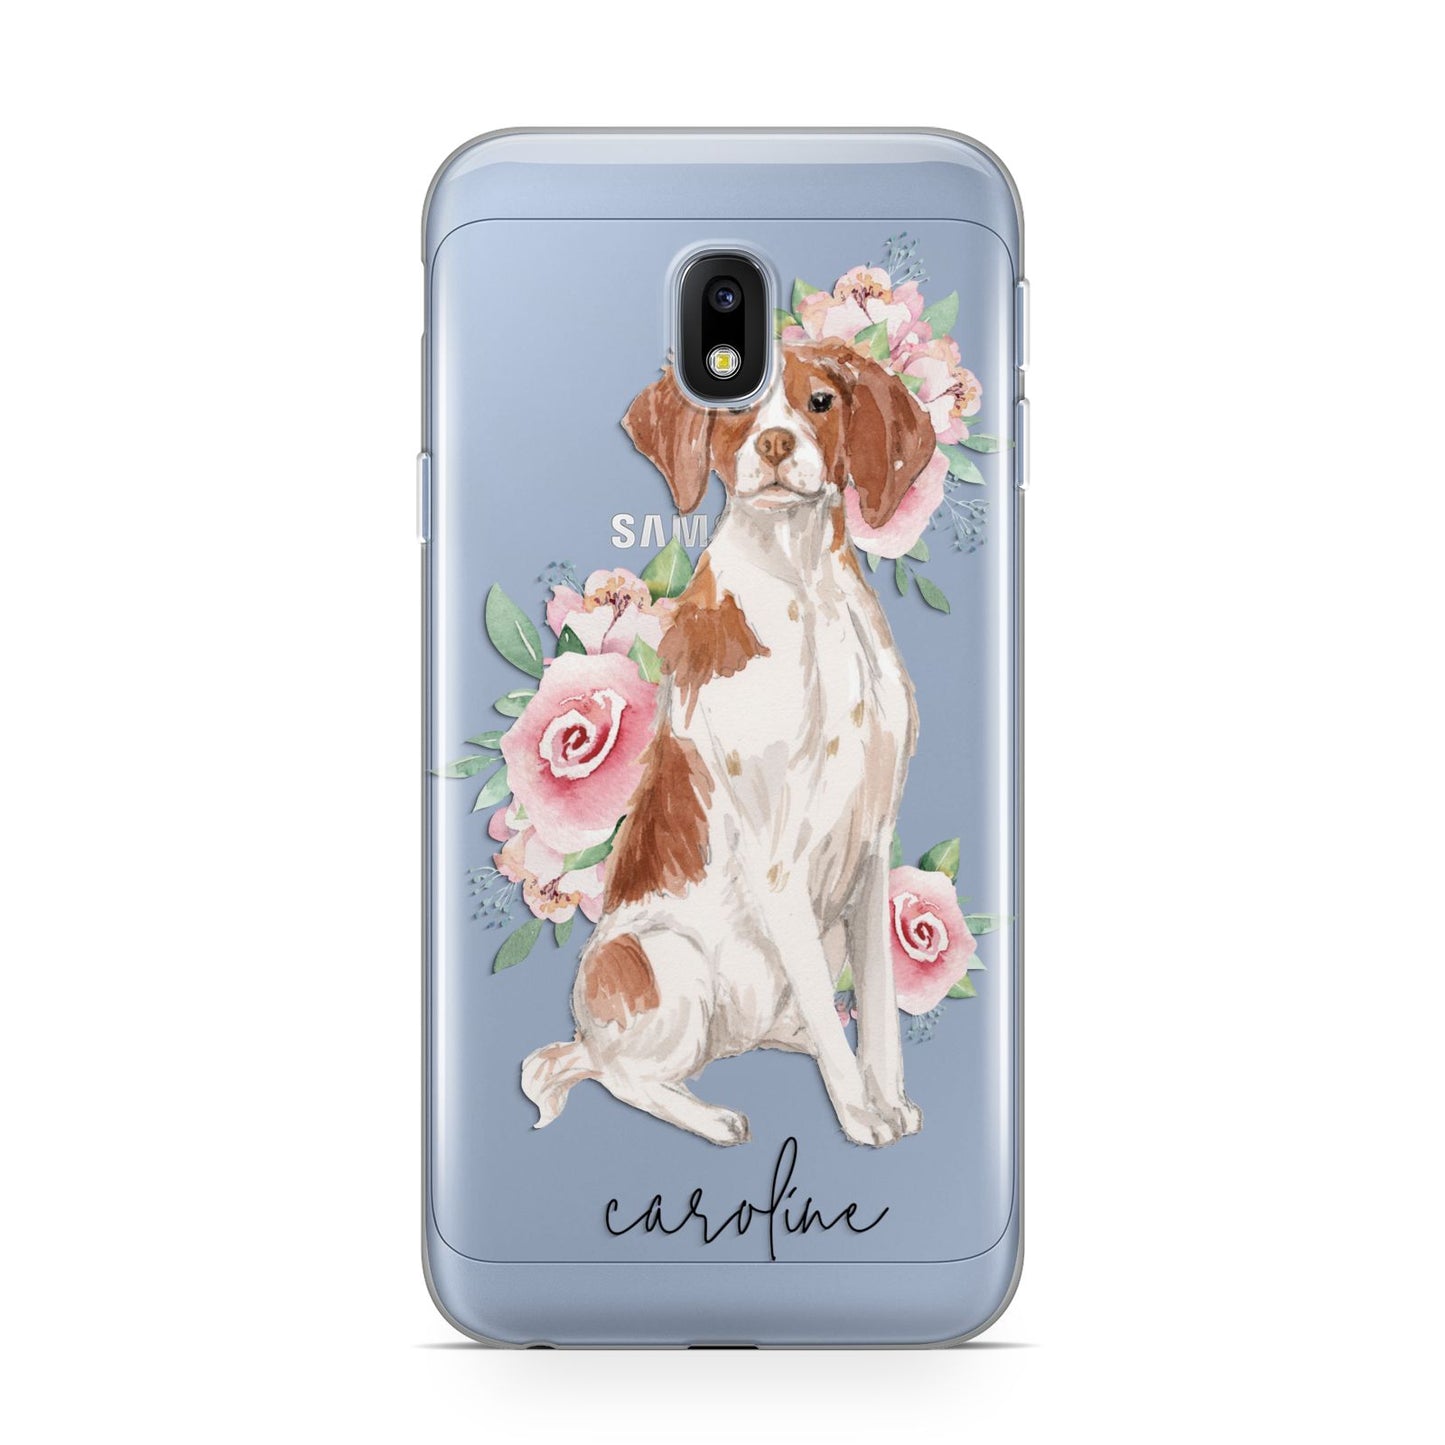 Personalised Brittany Dog Samsung Galaxy J3 2017 Case